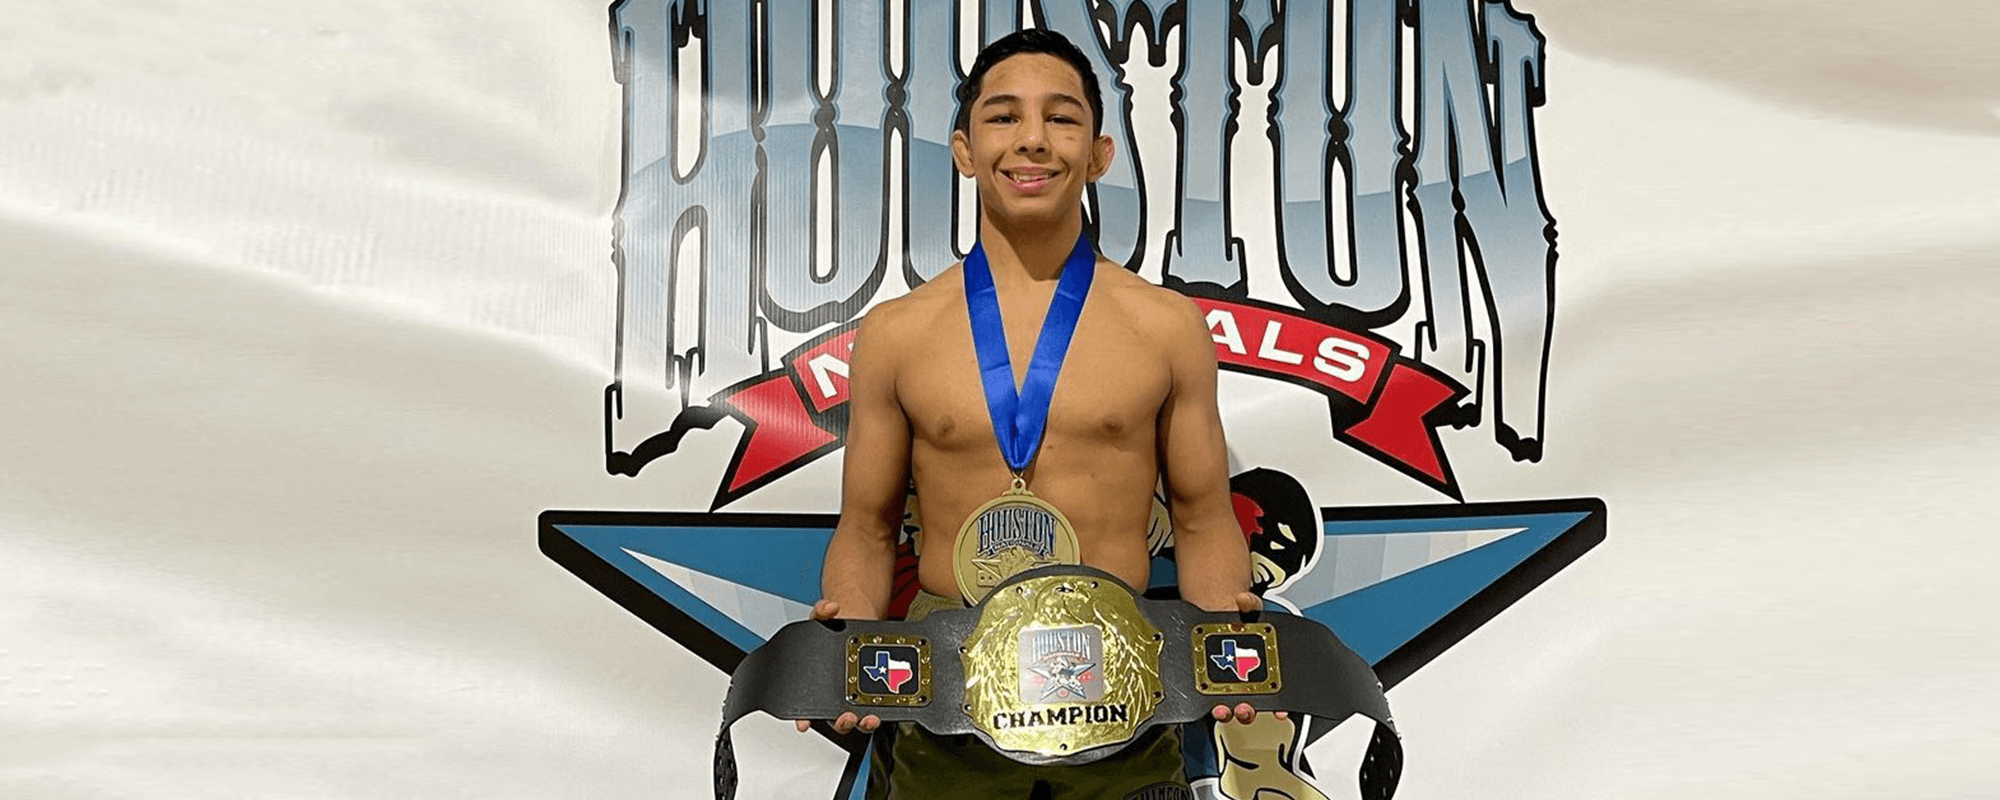 Dorian Olivarez - Young BJJ Grappler and Wrestler